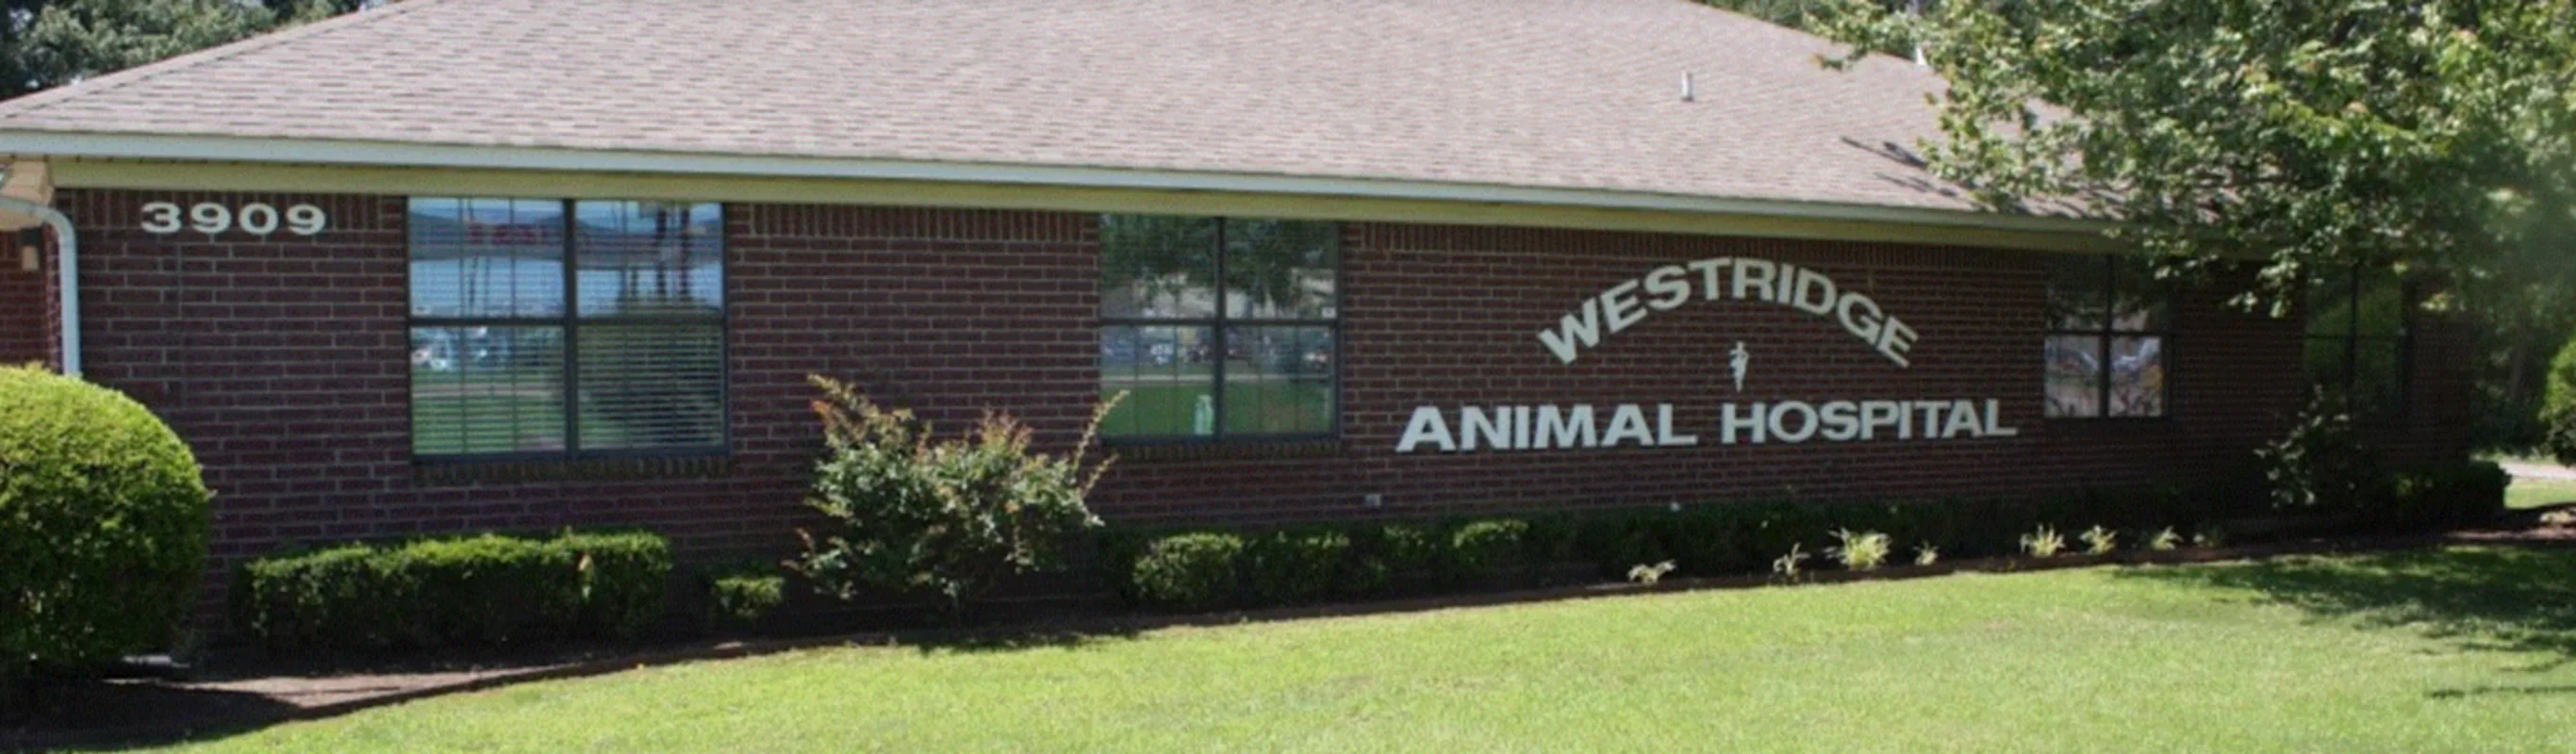 Westridge Animal Hospital front of building 